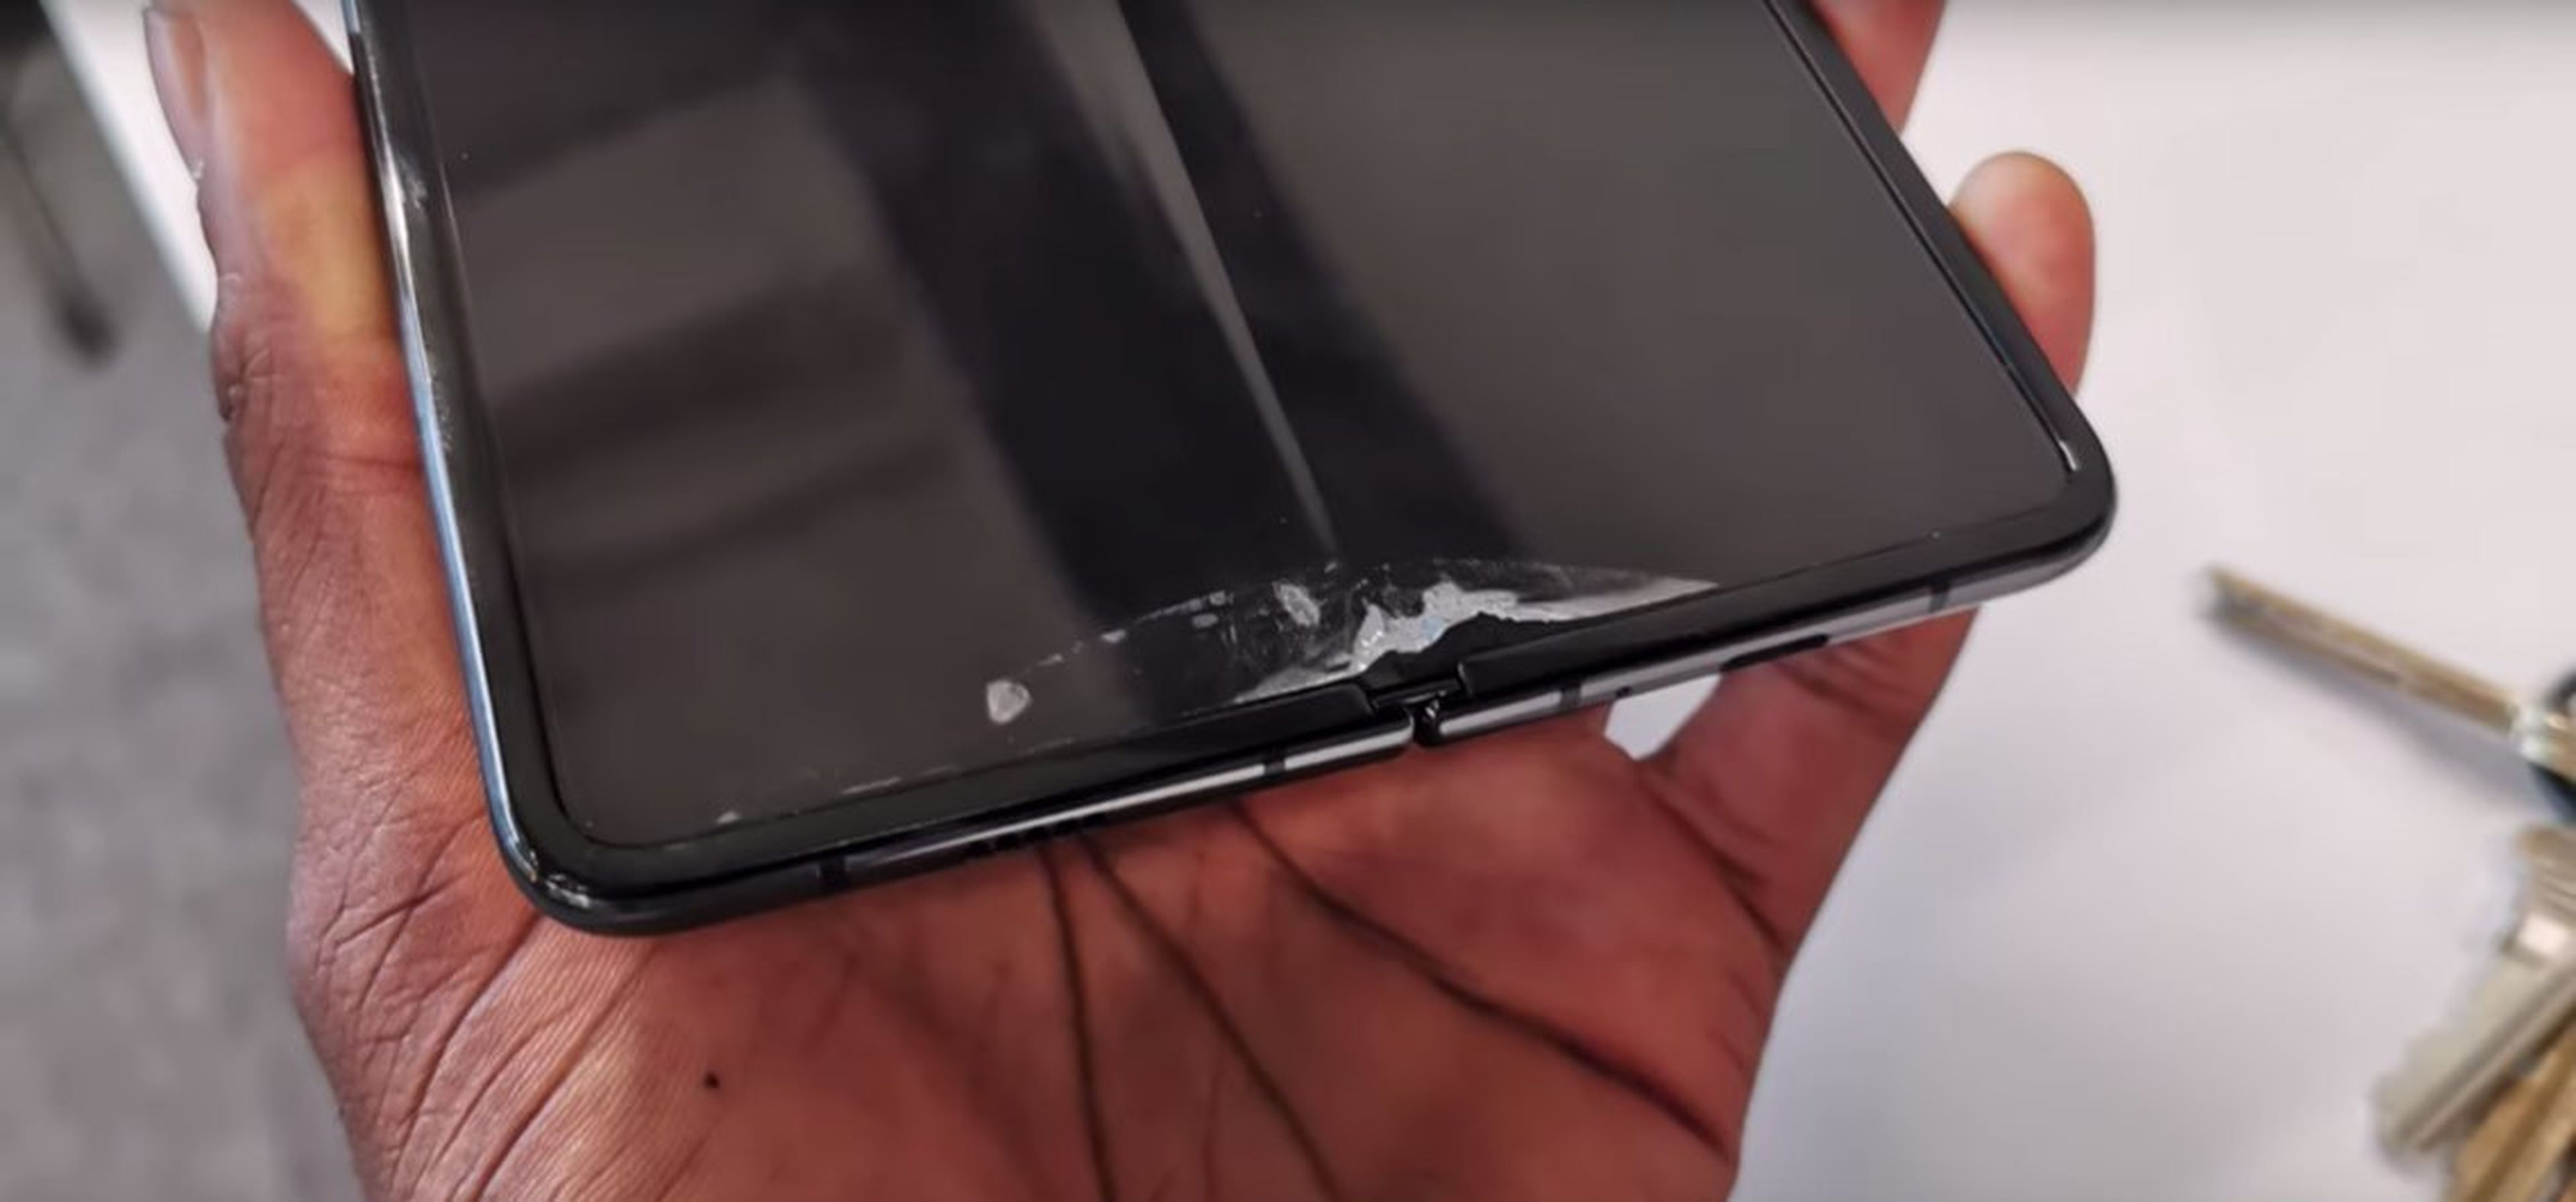 Samsung plegable roto